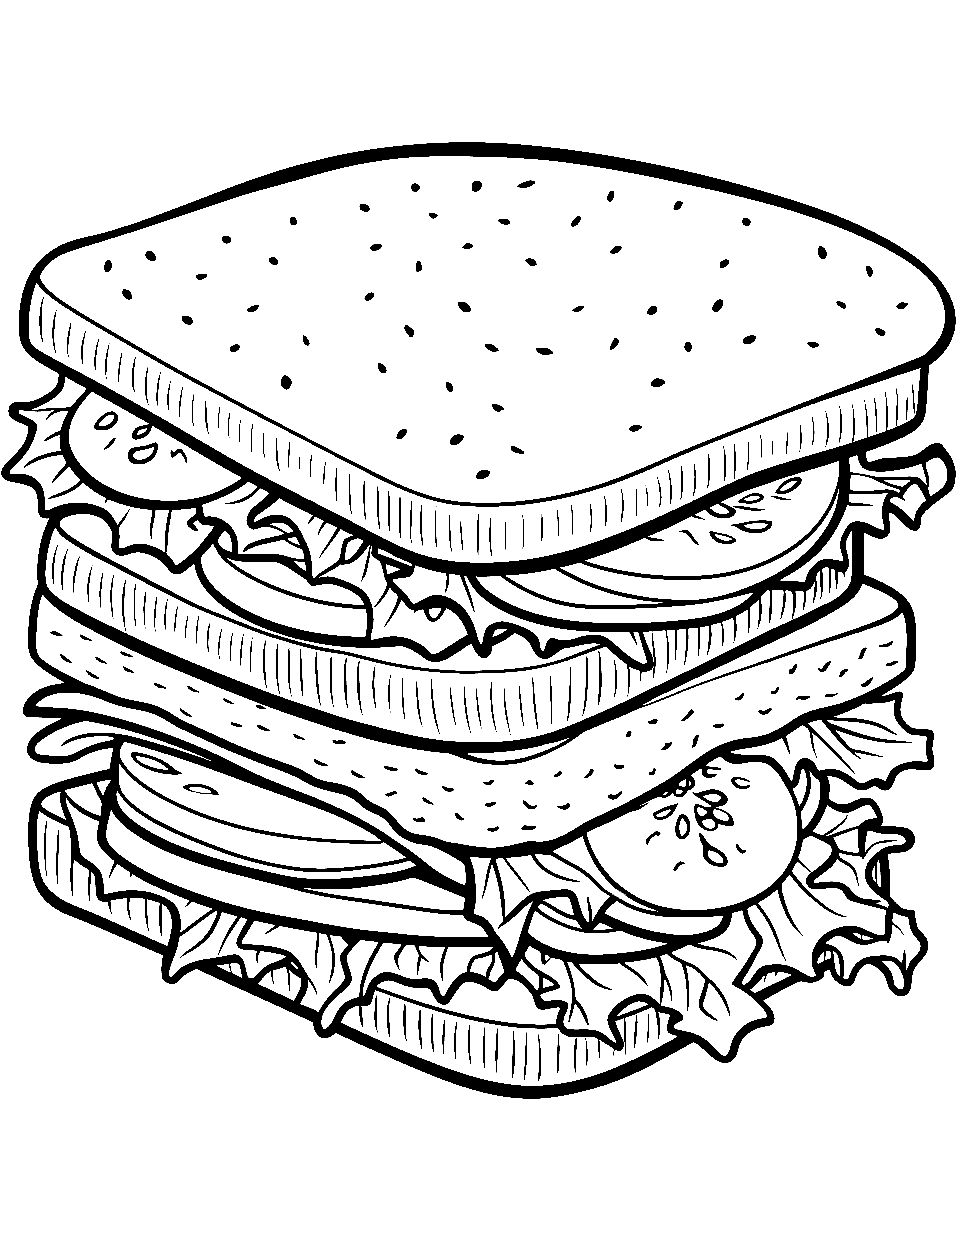 Turkey Sandwich Delight Food Coloring Page - A turkey sandwich with fresh veggies.